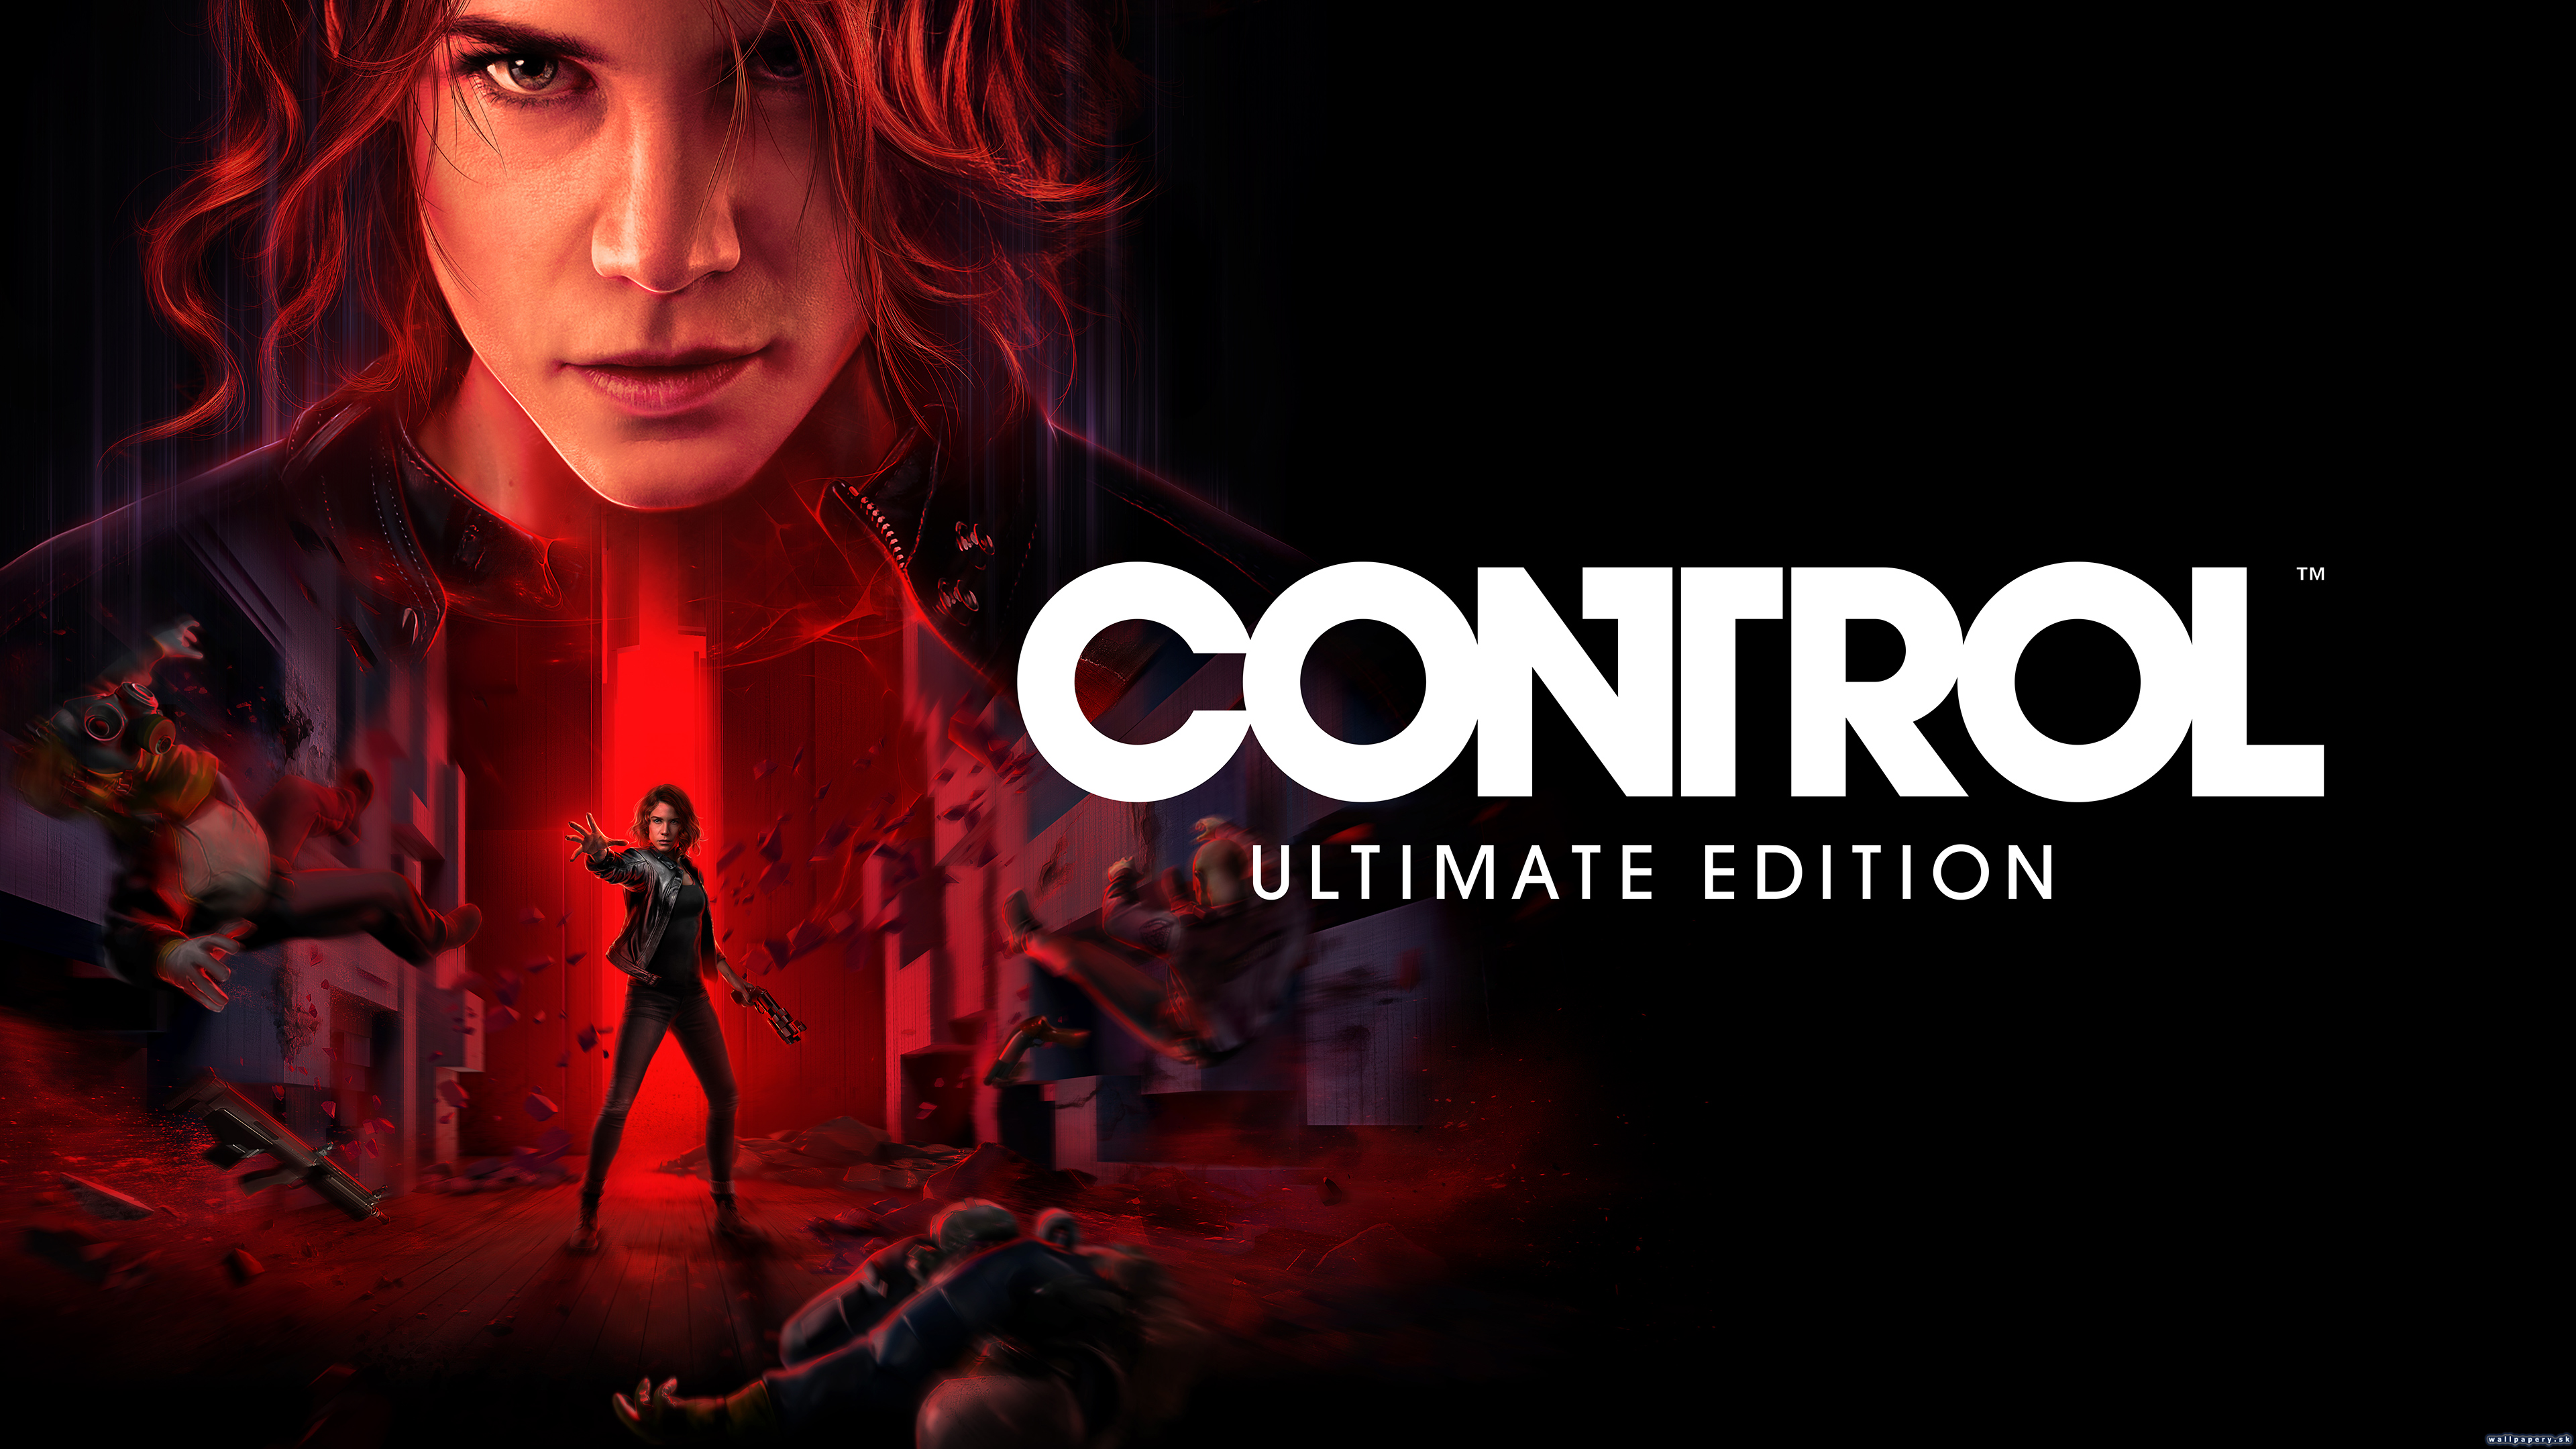 Control Ultimate Edition - wallpaper 1